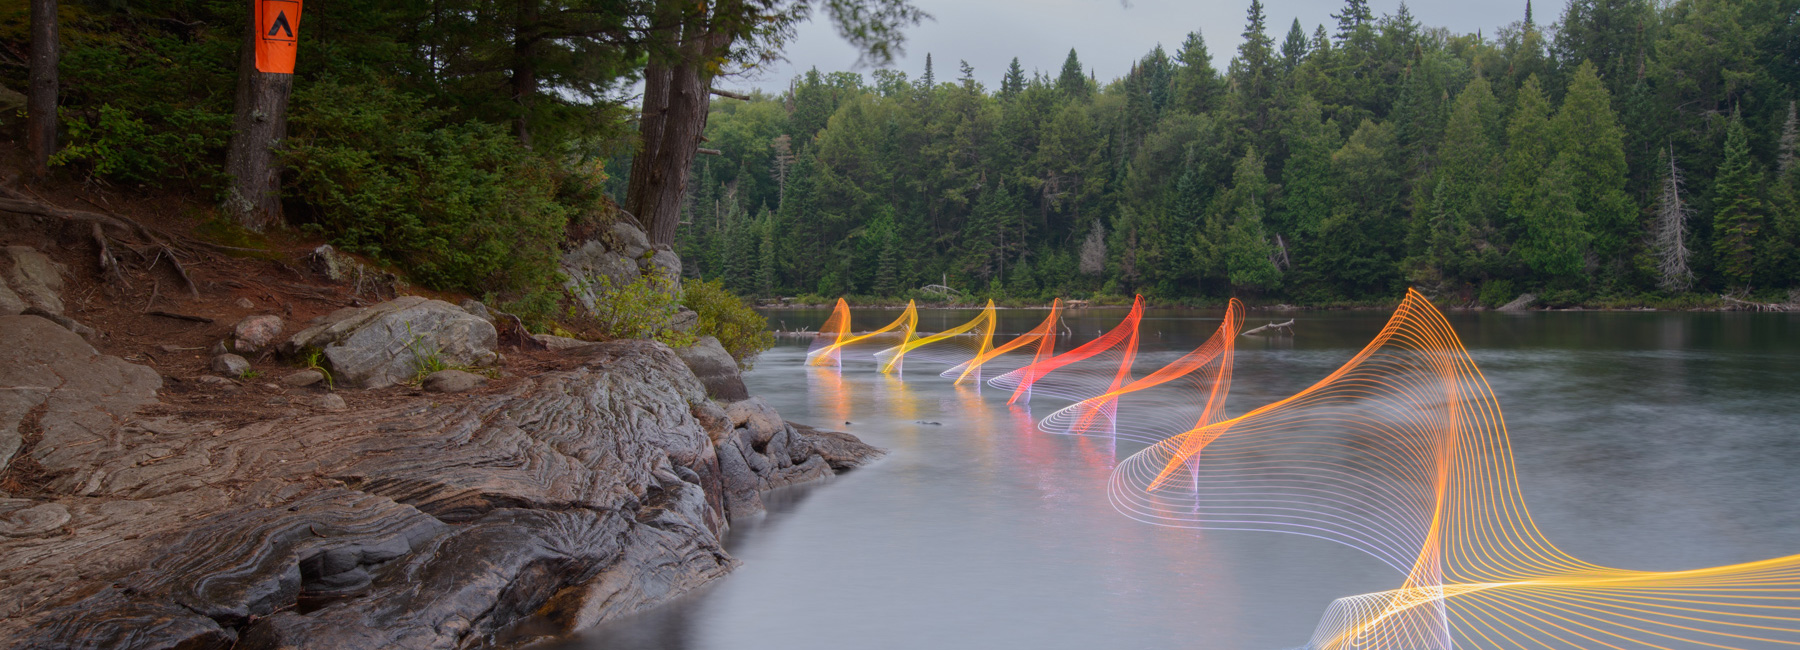 stephen orlando's long exposure LED photos curl through the canadian landscape